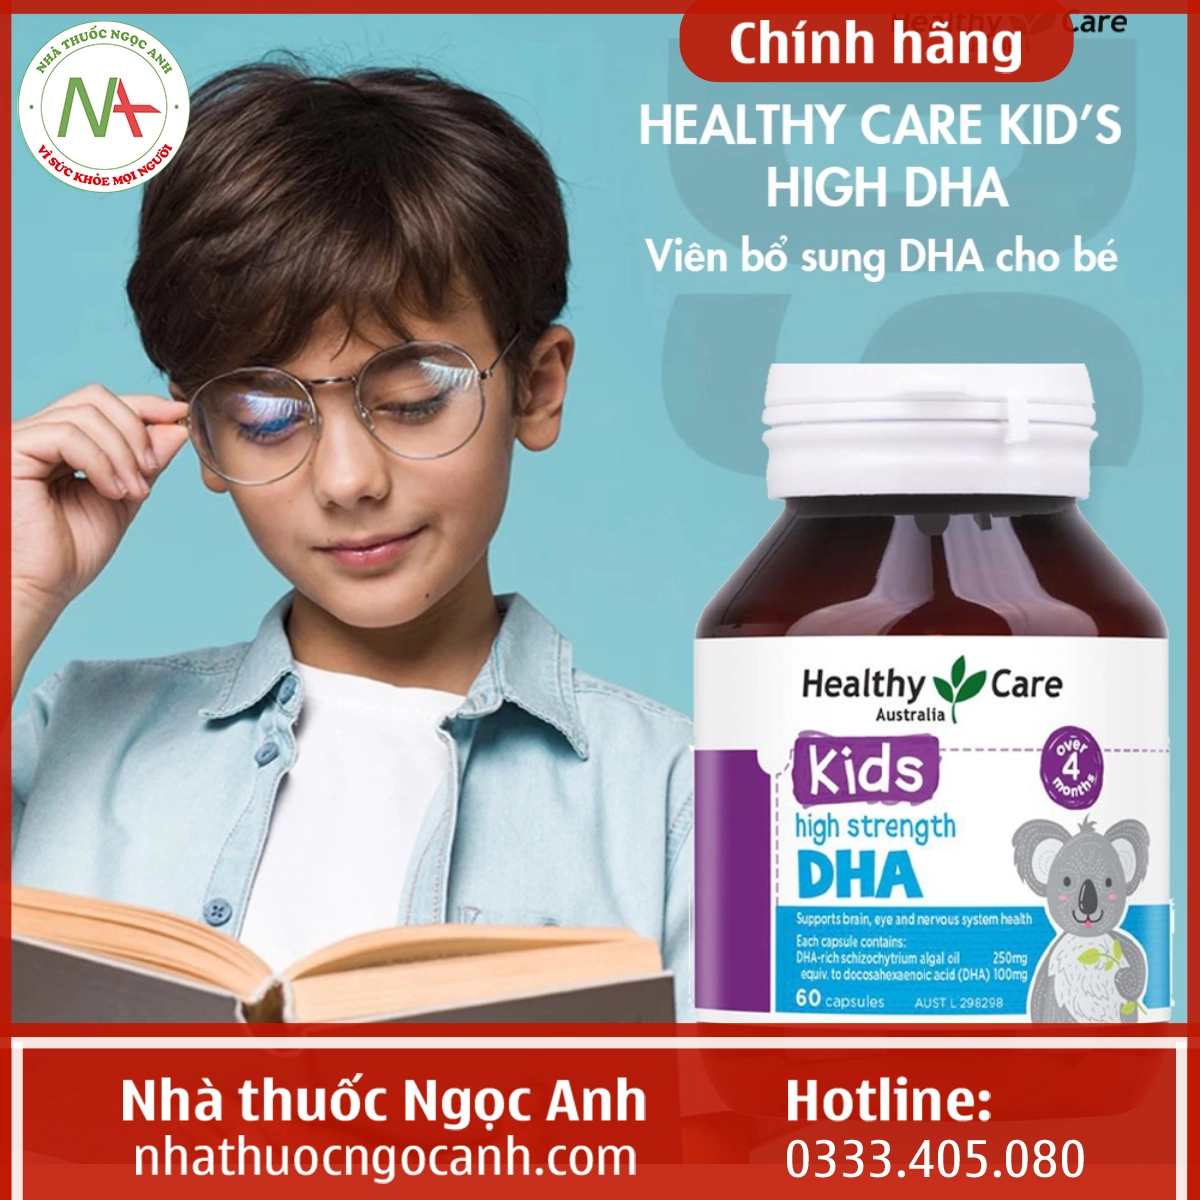 Healthy Care Kids High Strength DHA cung cấp DHA cho bé